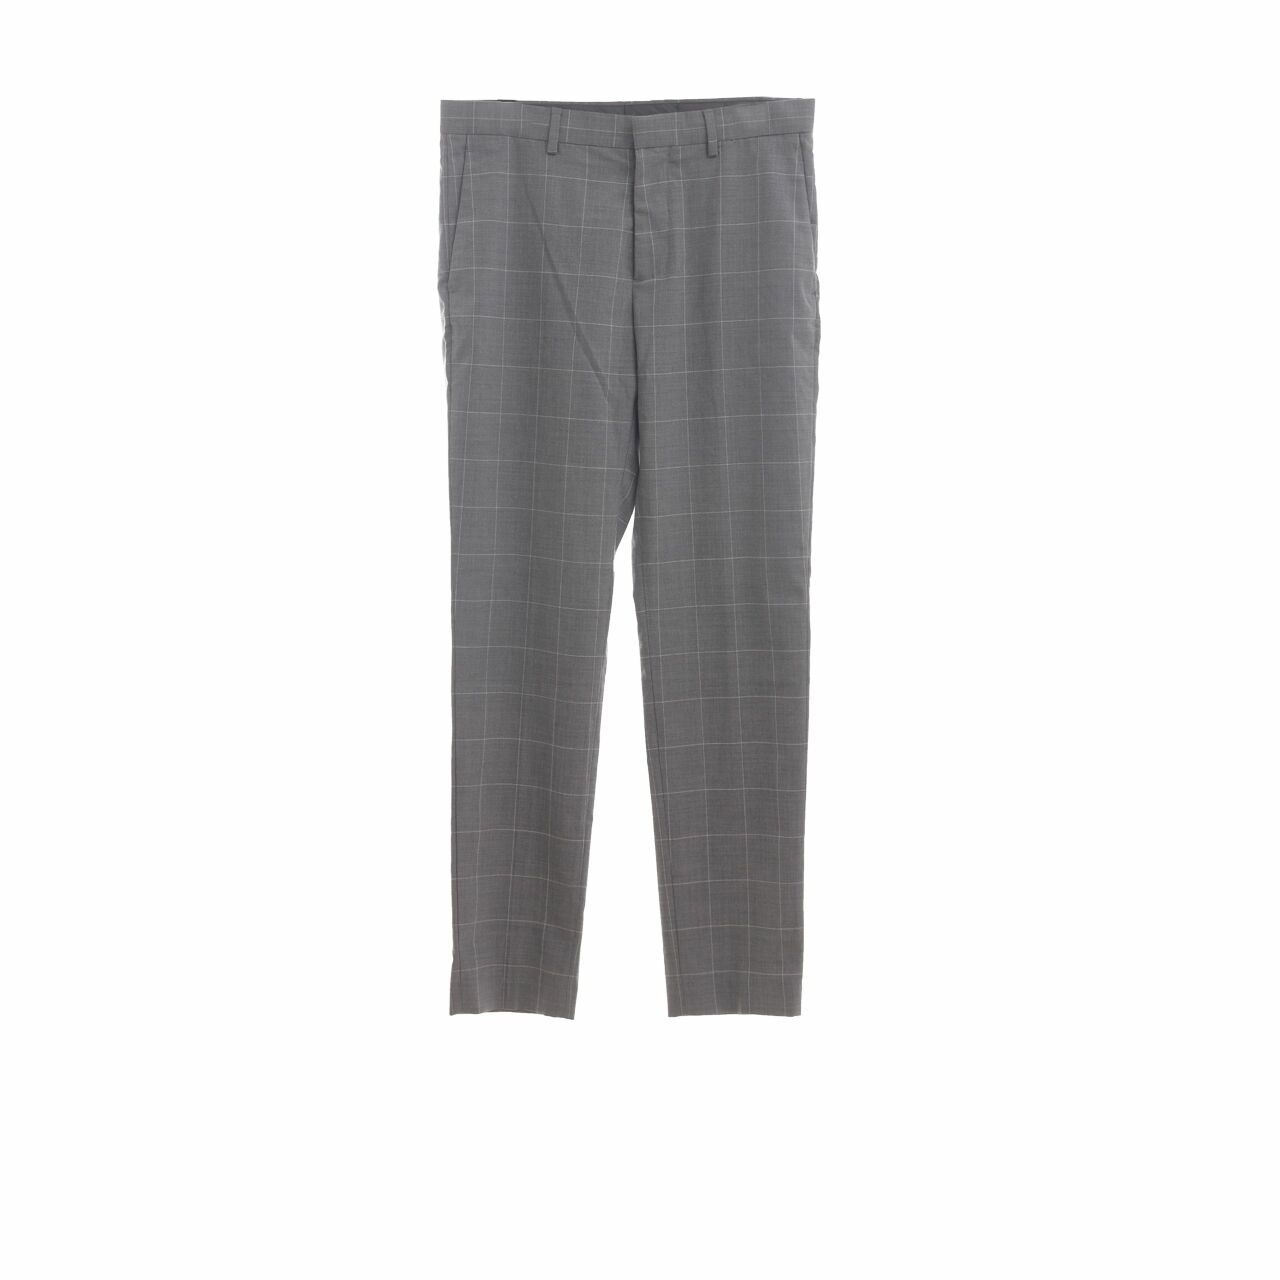 H&M Grey Plaid Long Pants